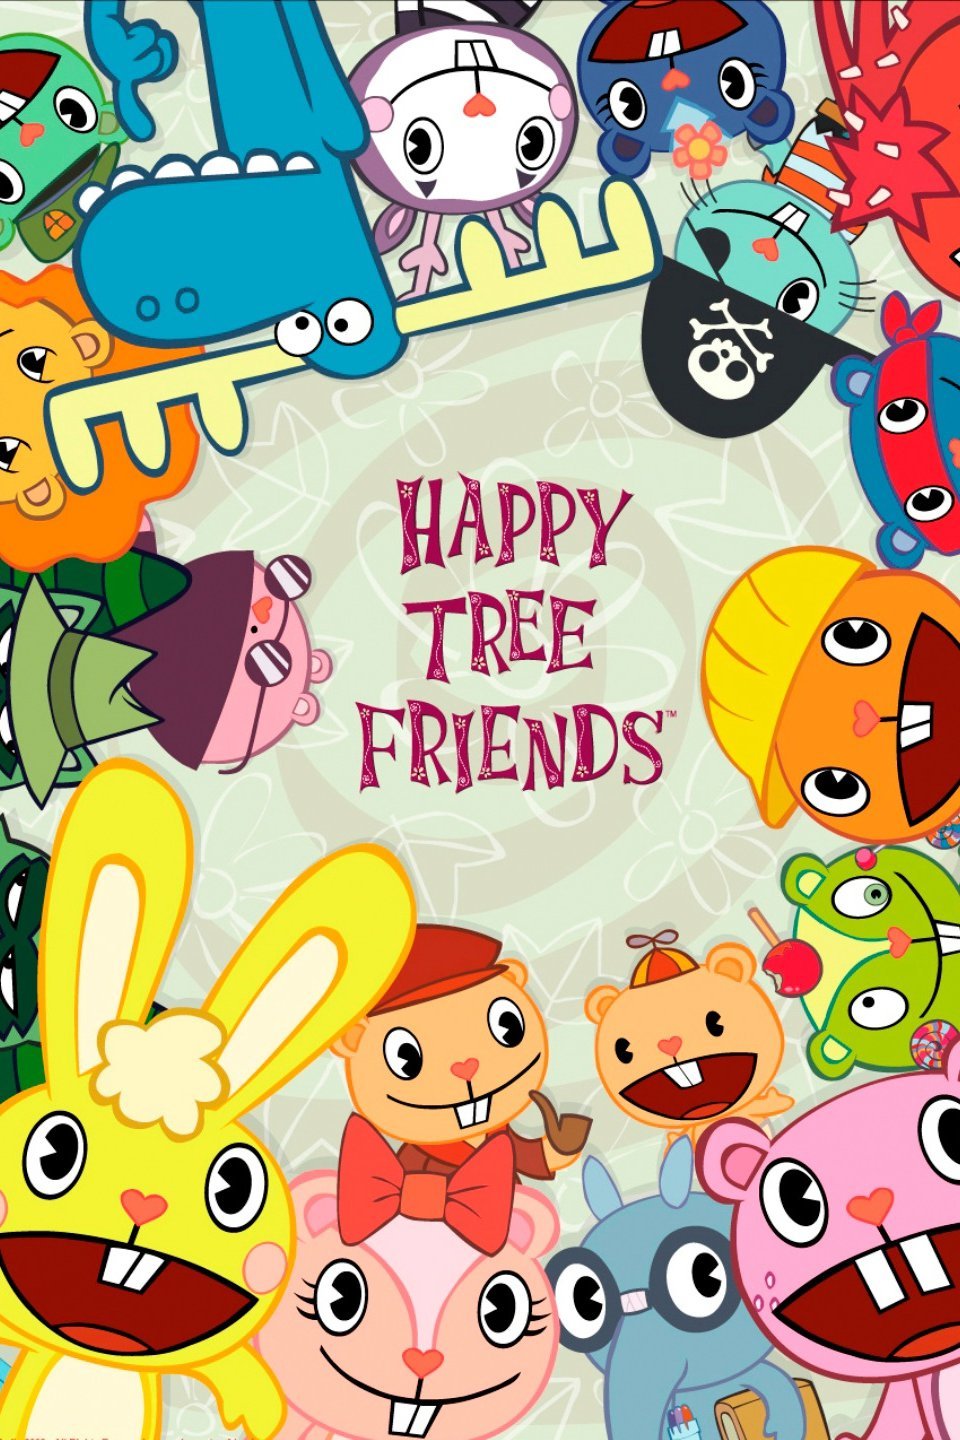 Happy Tree Friends ハッピー ツリー フレンズ Htf ハピツリ のネタバレ解説まとめ 4 5 Renote リノート